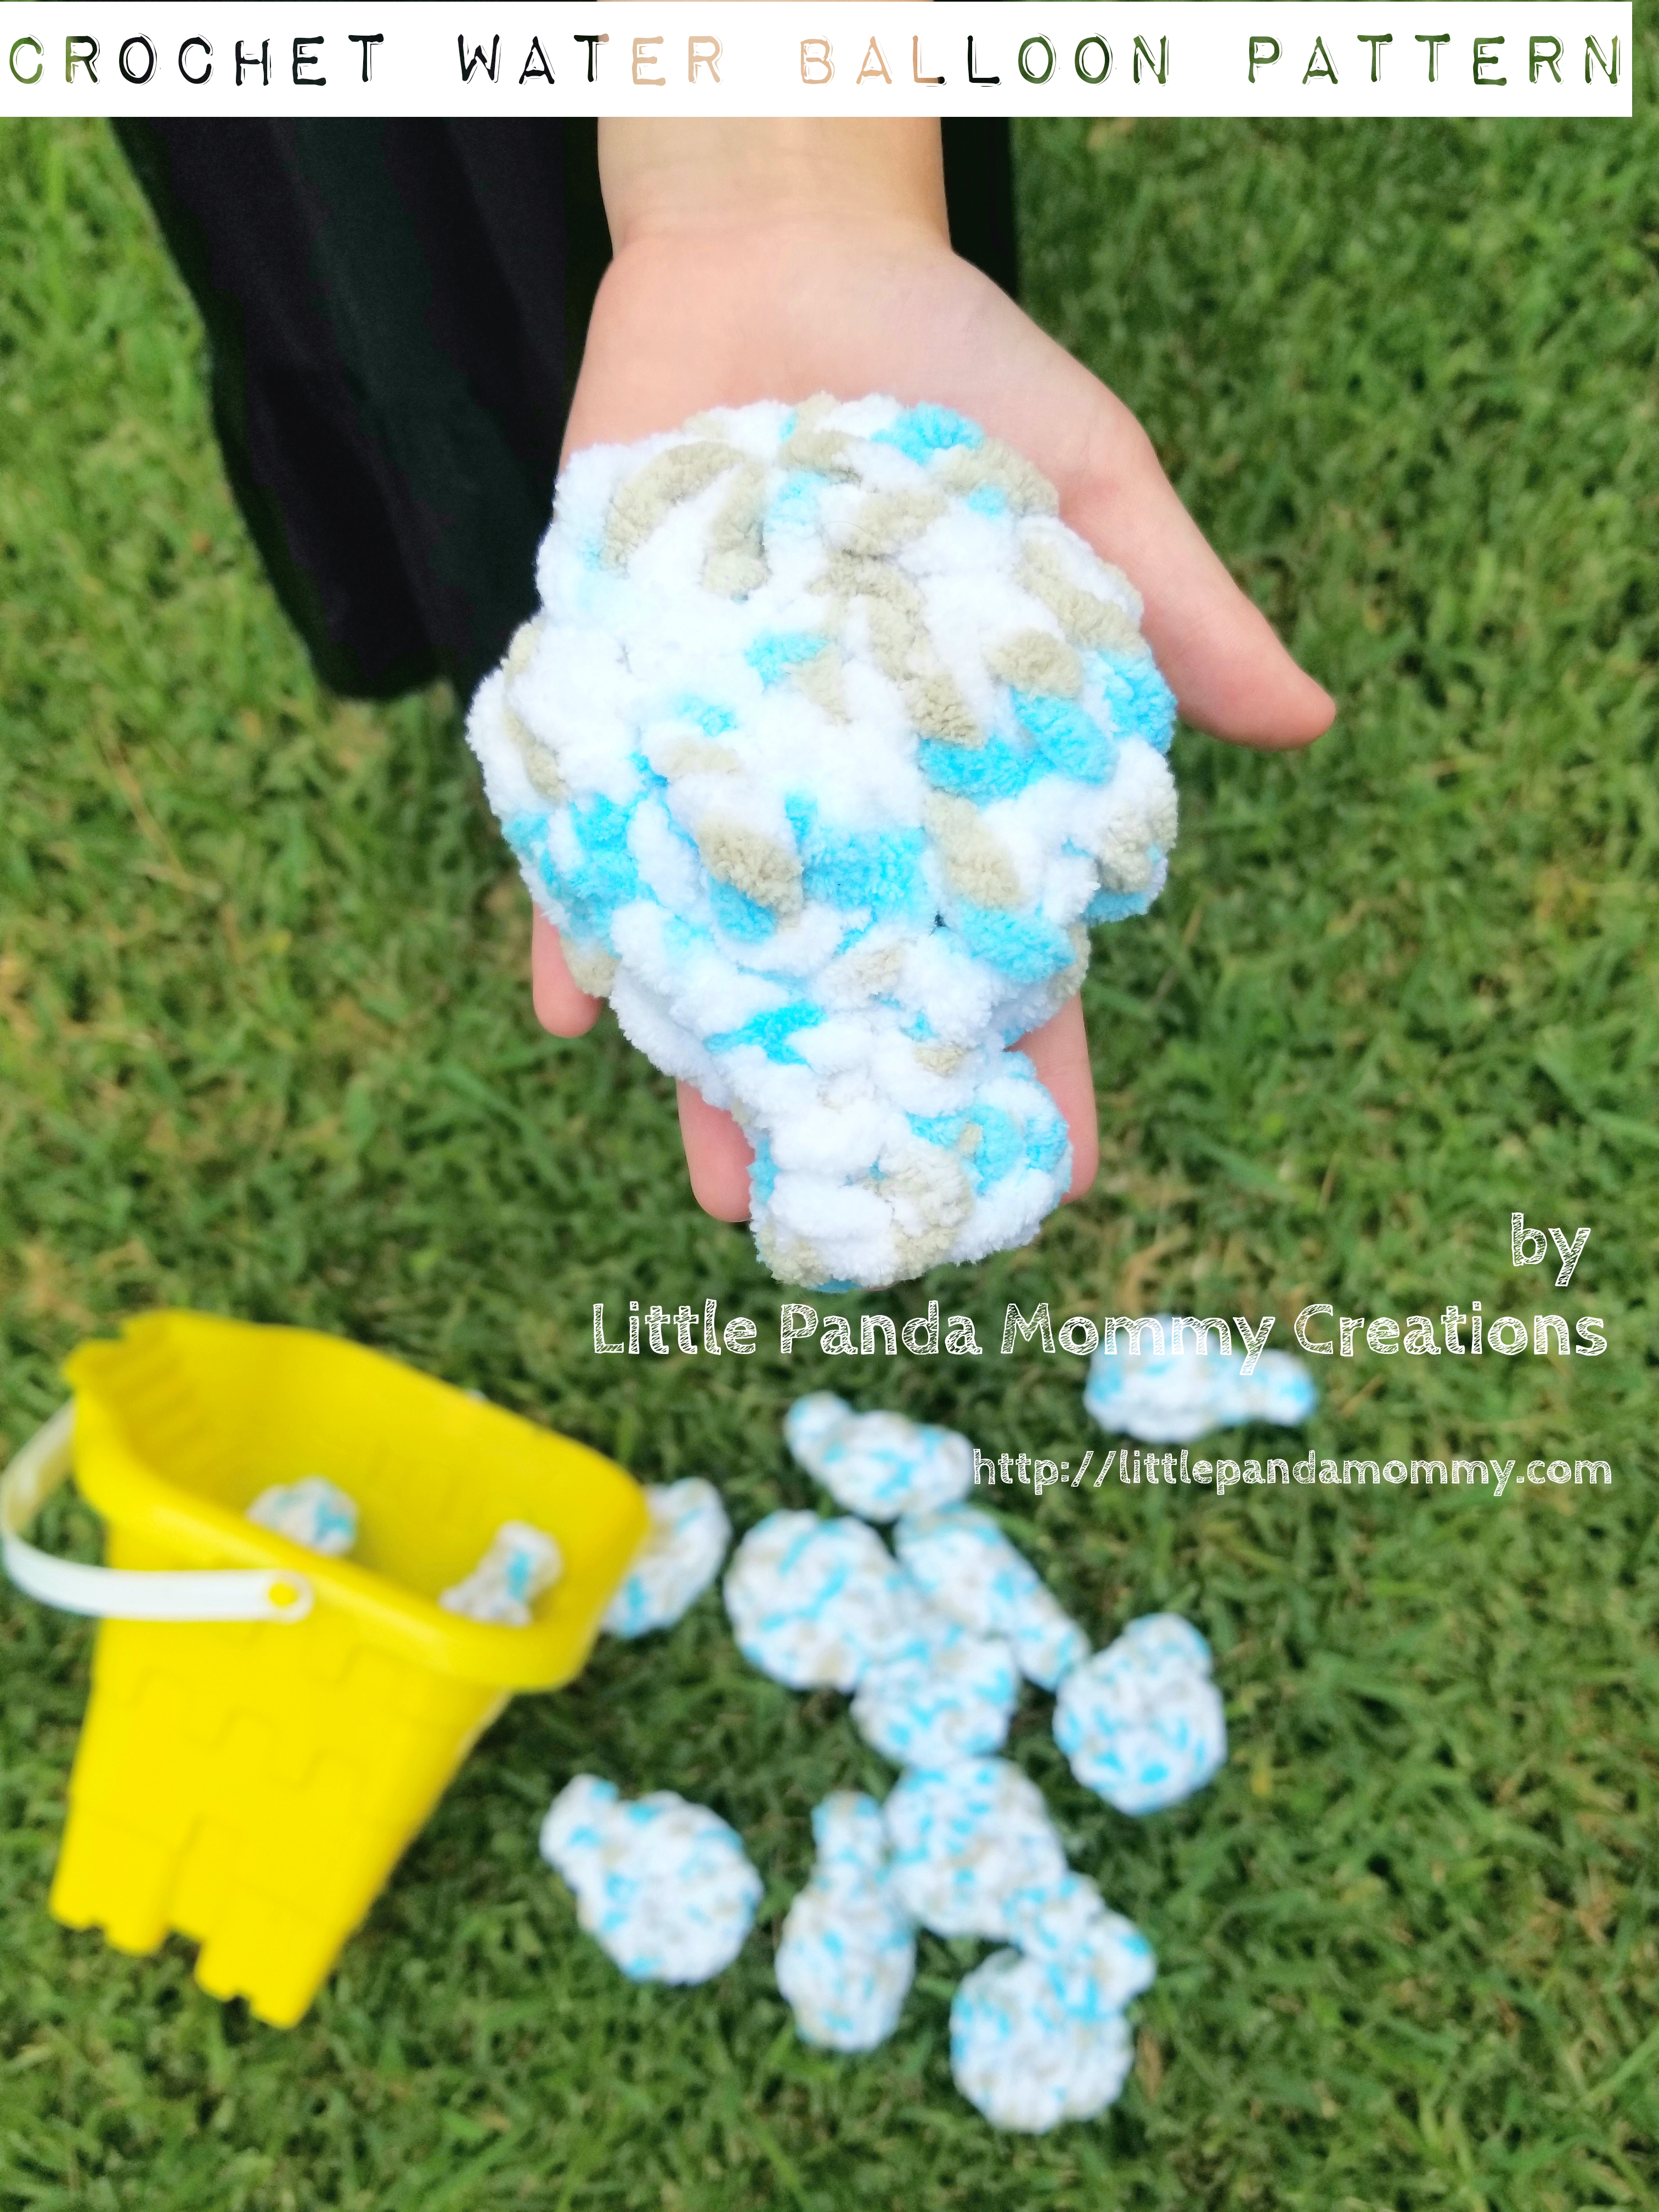 bellen mode Latijns how to make crocheted water balloon Archives - Little Panda Mommy